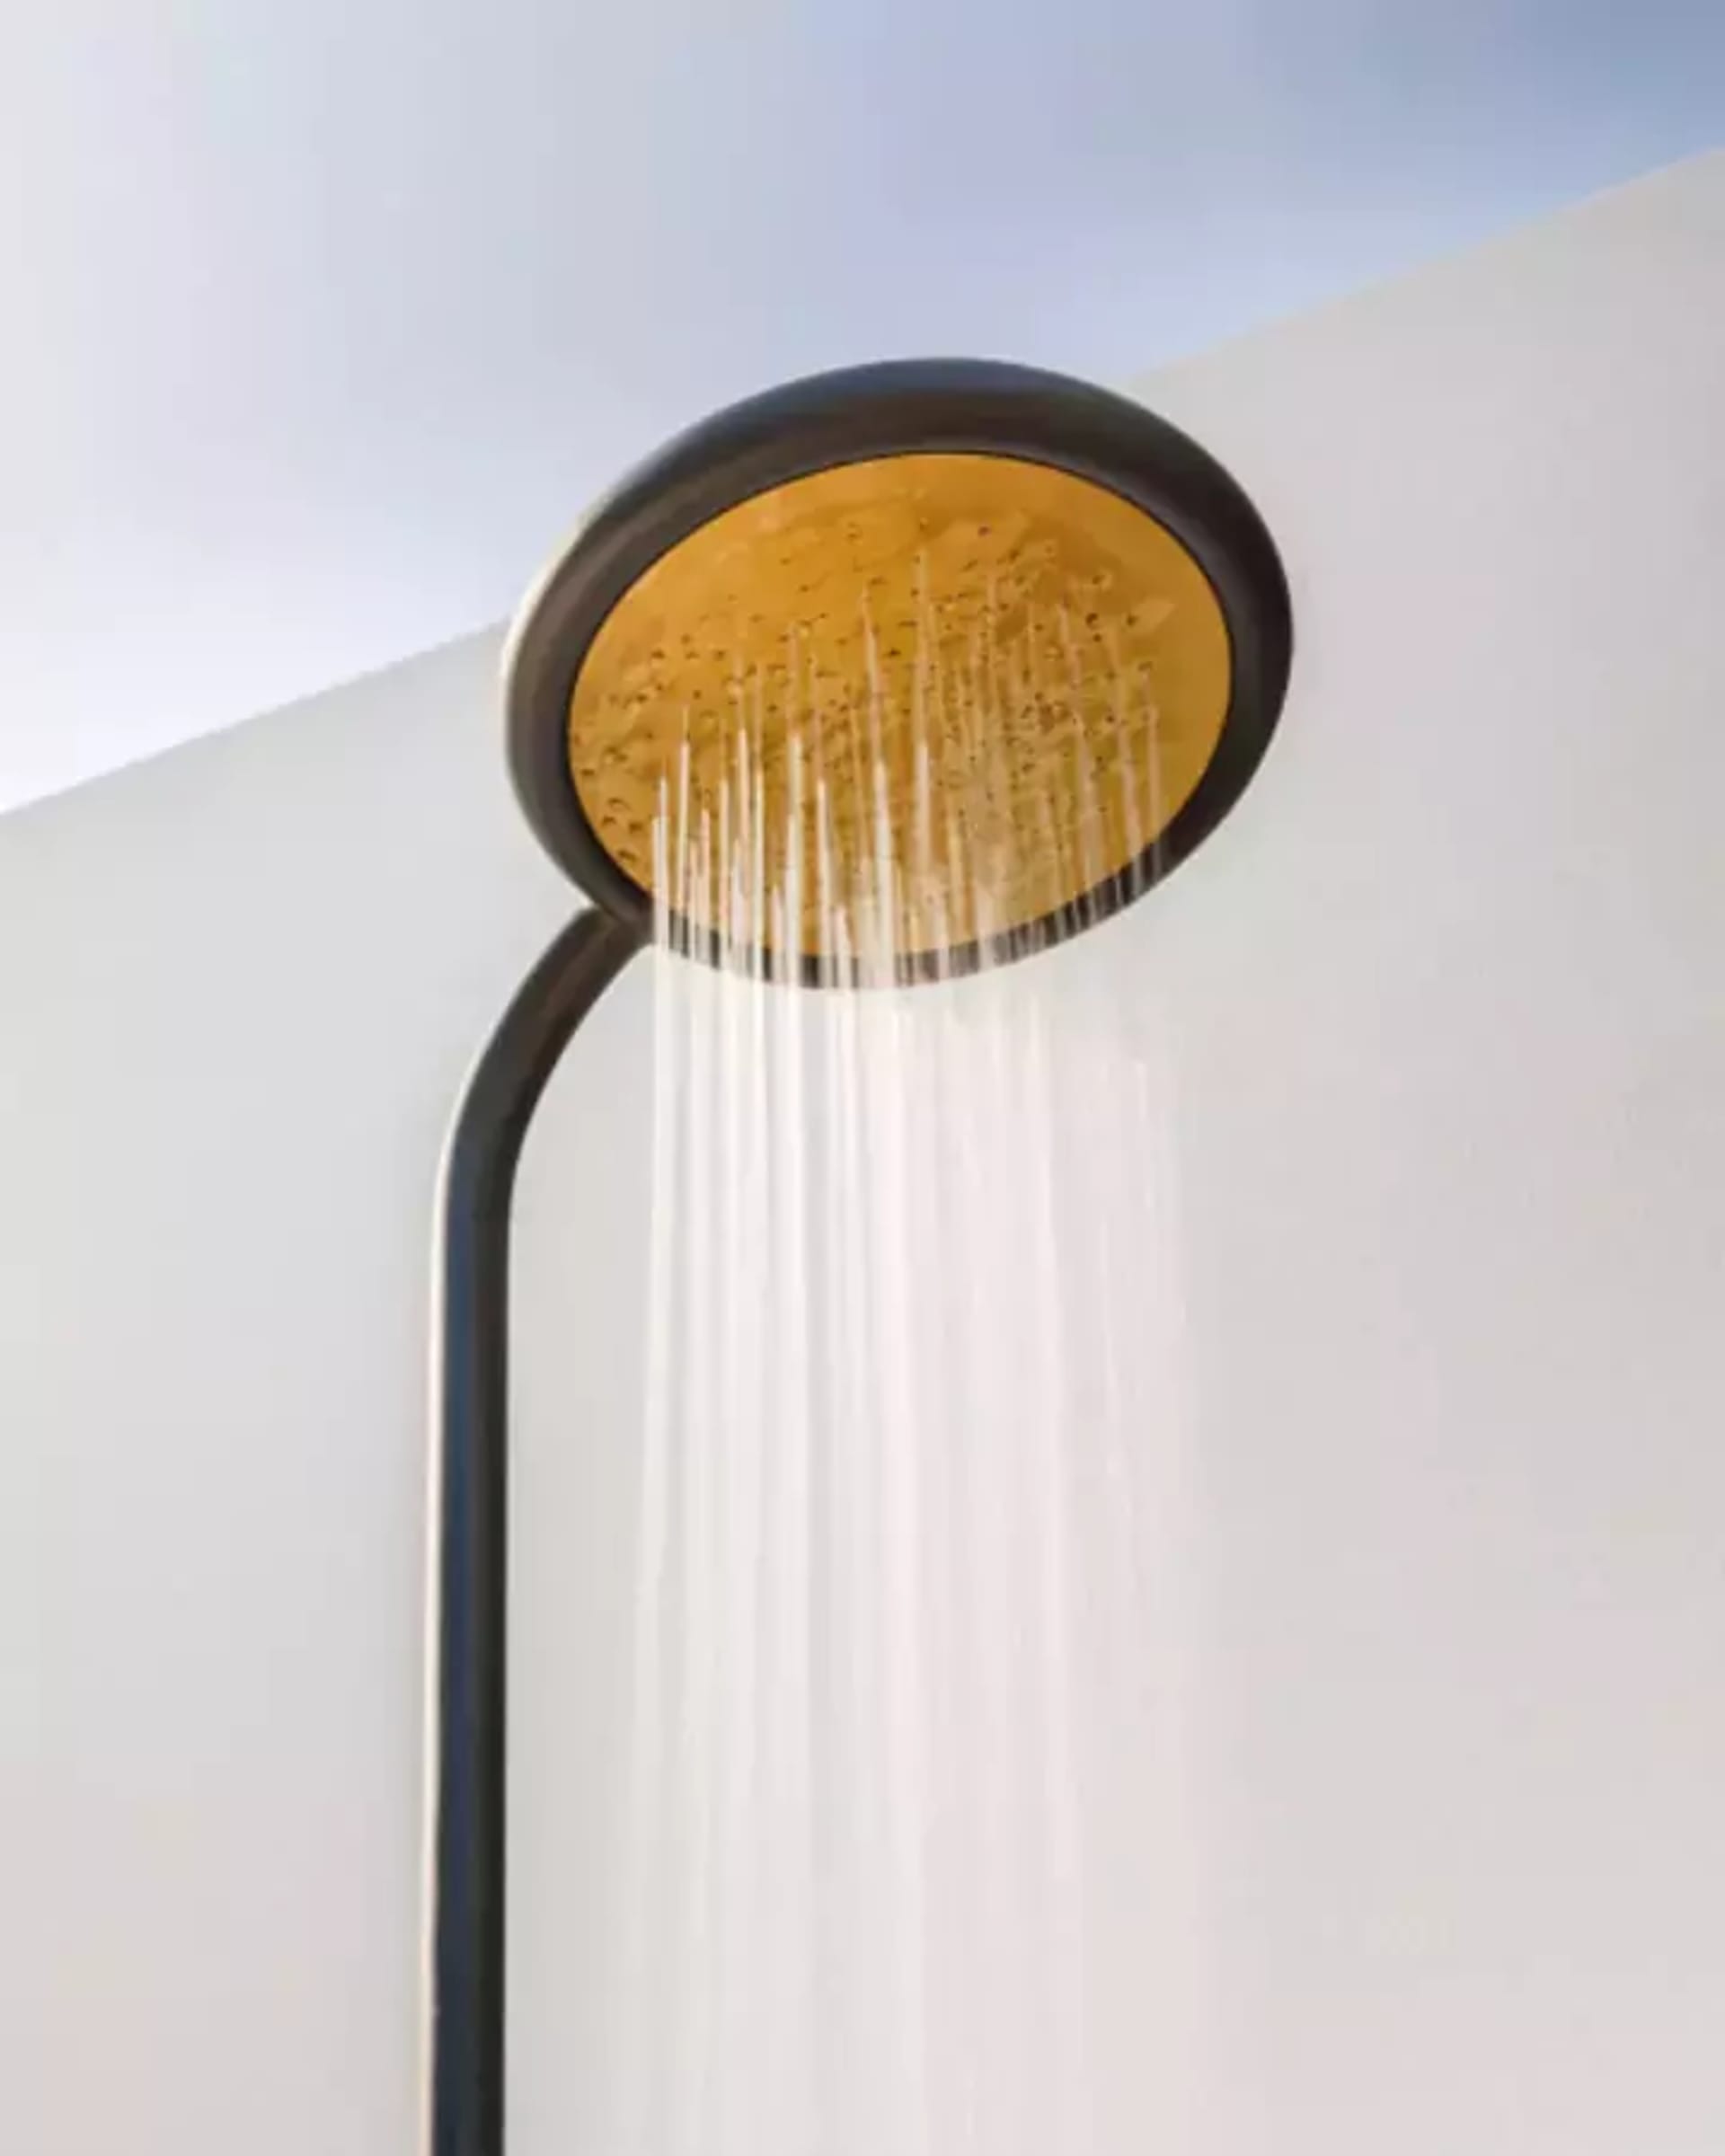 Showers & garden hoses figure image